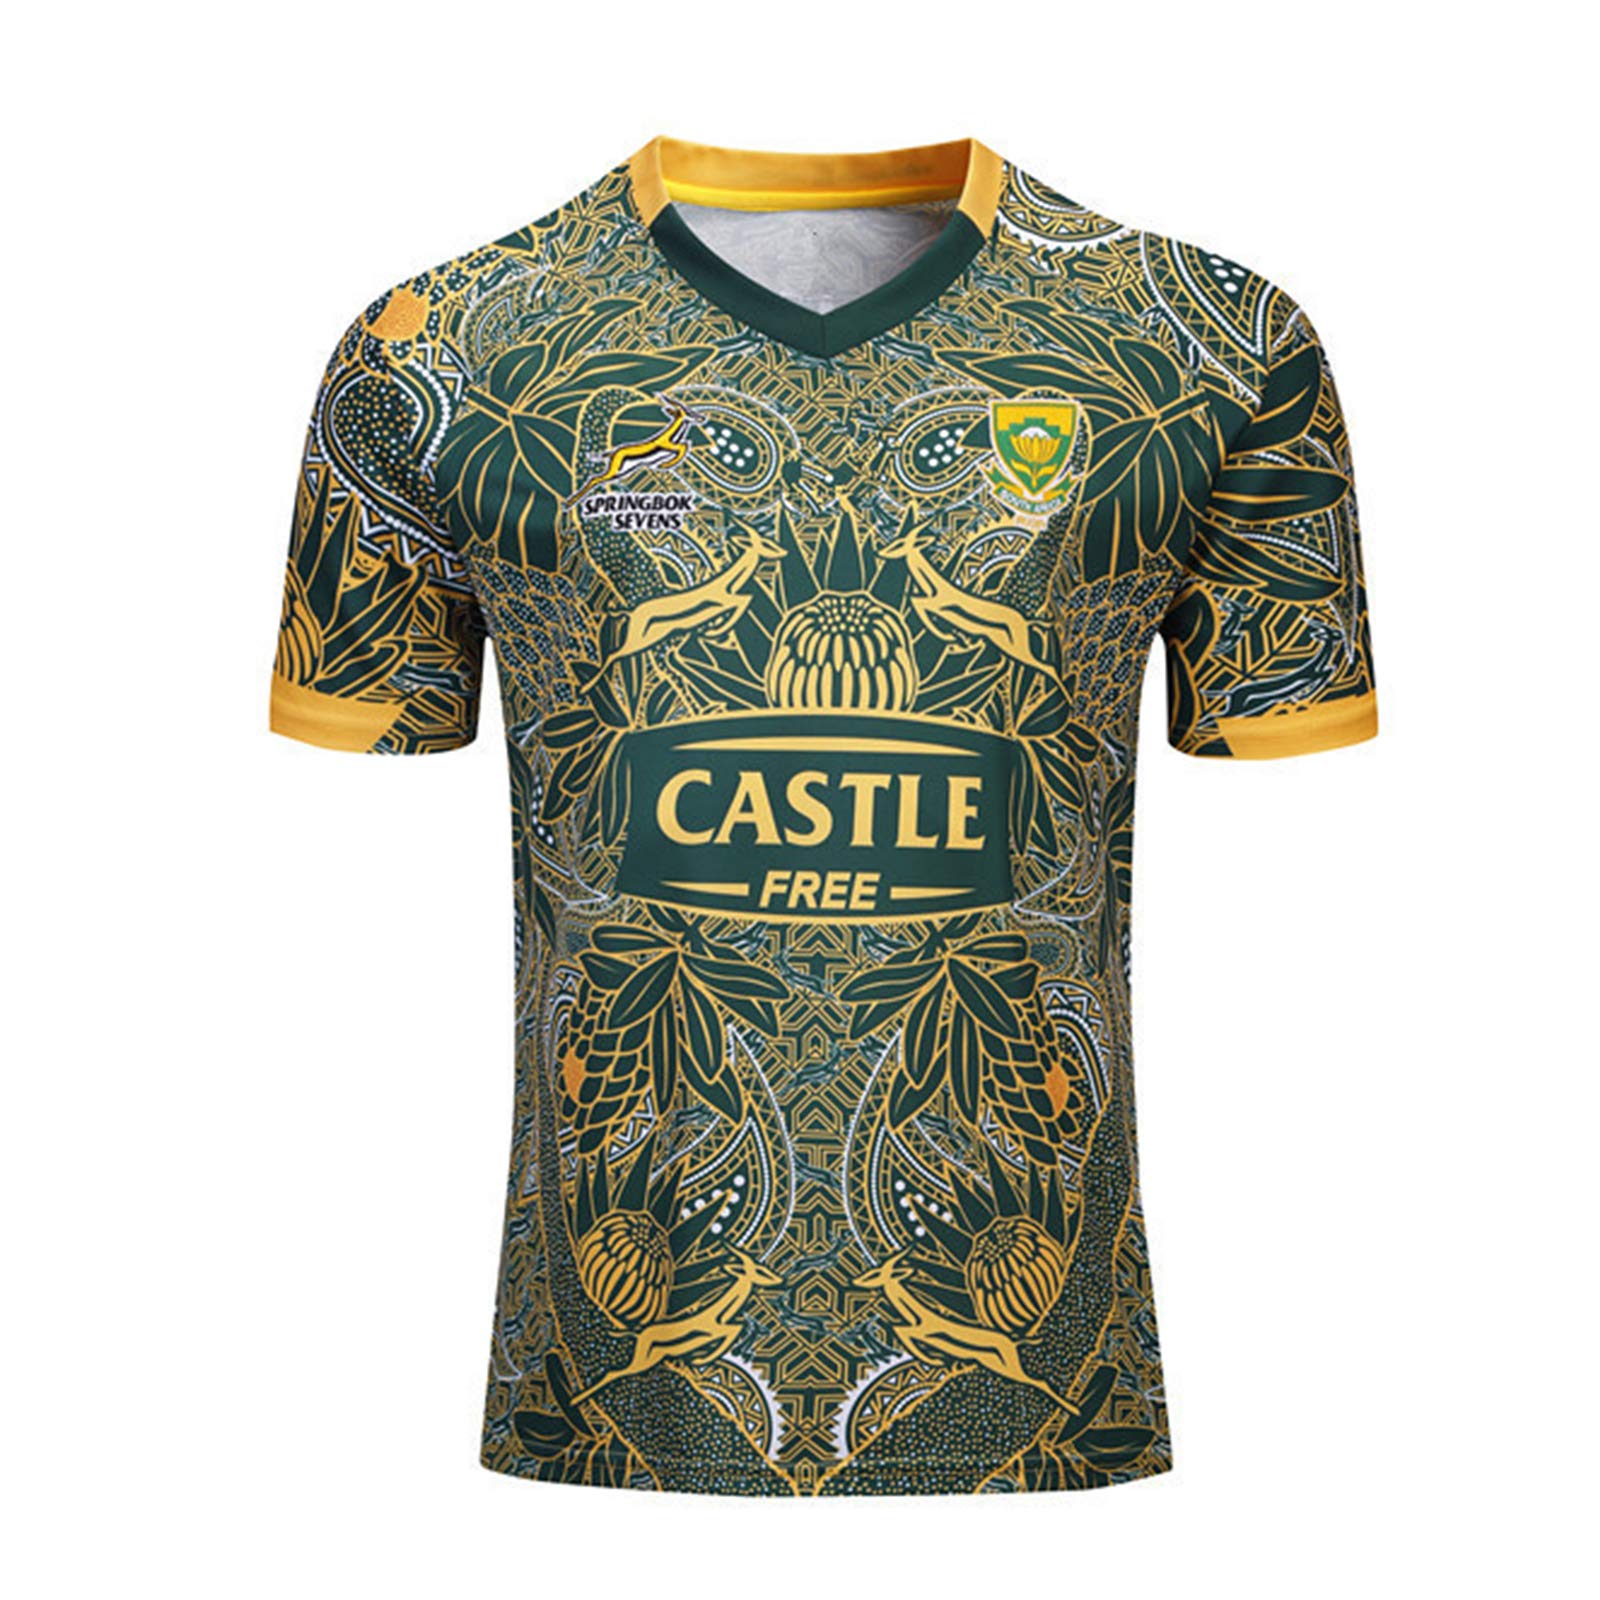 2020 Südafrika Springbok 7S Rugby Jersey-WM 2019 Aus Baumwoll-Jersey-Grafik-T-Shirt 100. Anniversary Edition Fans T-Shirts Kurzarm Trainingssportkleidung Polo-Hemd XL